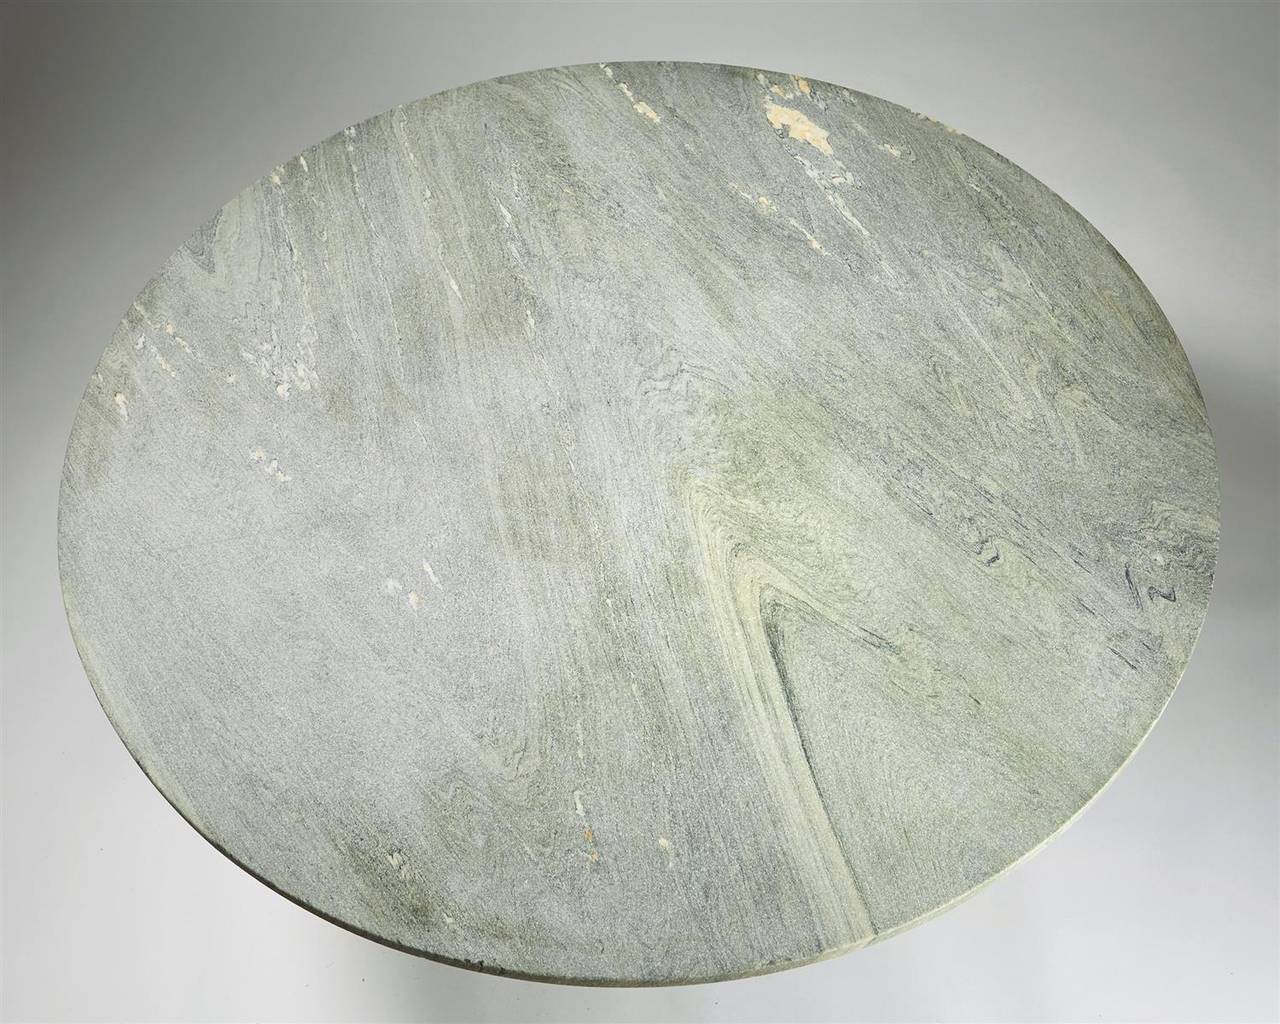 Dining table PK54 designed by Poul Kjaerholm for E Kold Christensen, Denmark, 1963.
Brushed steel and flint rolled cipollini marble.